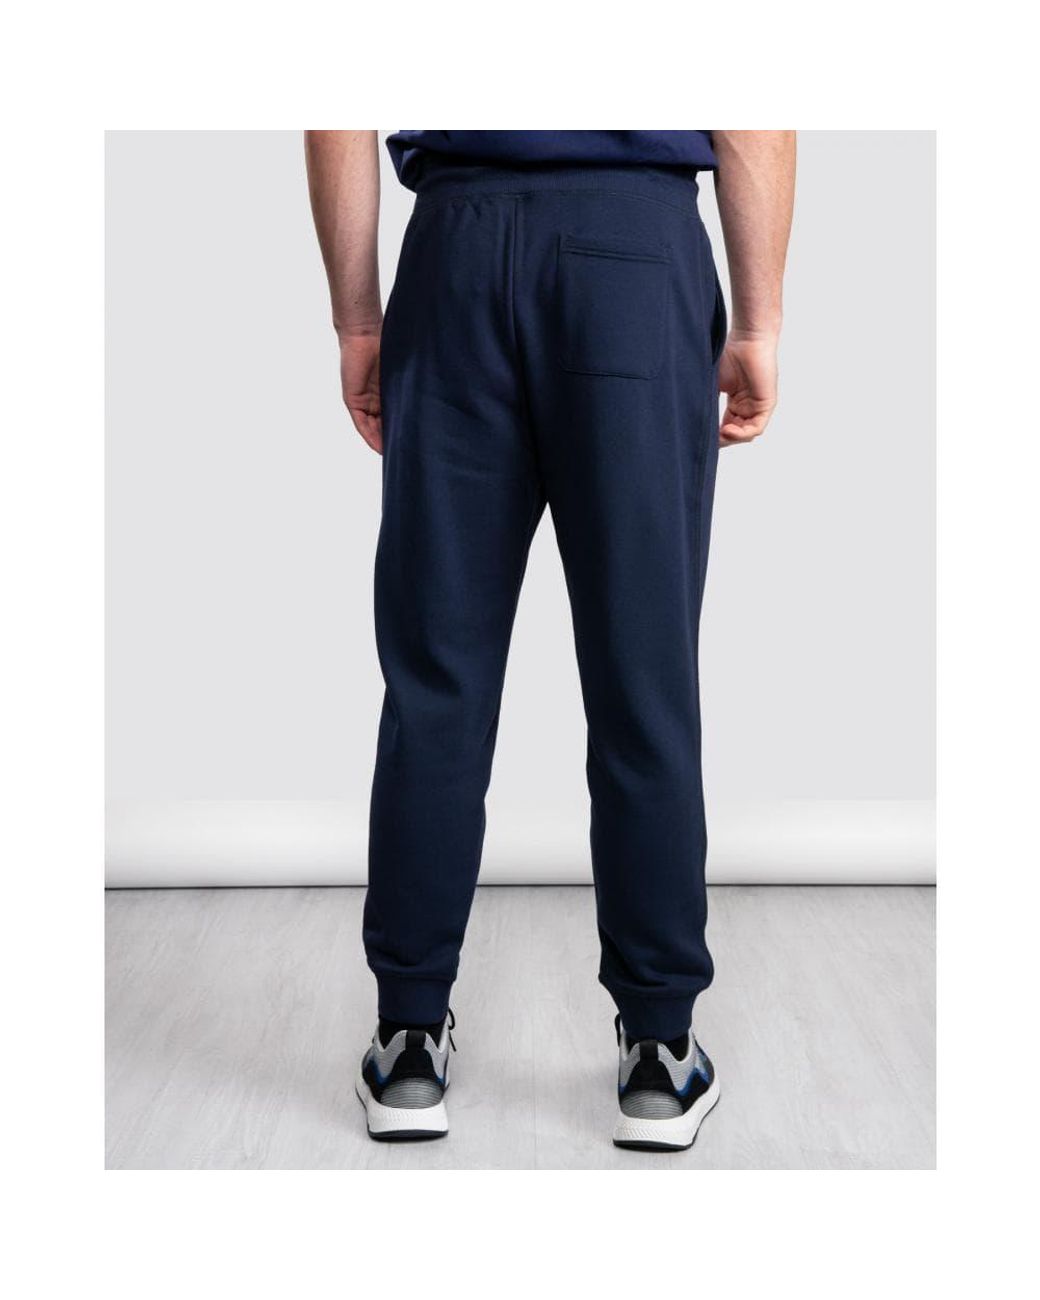 GANT Original Sweat Pants in Blue for Men - Lyst